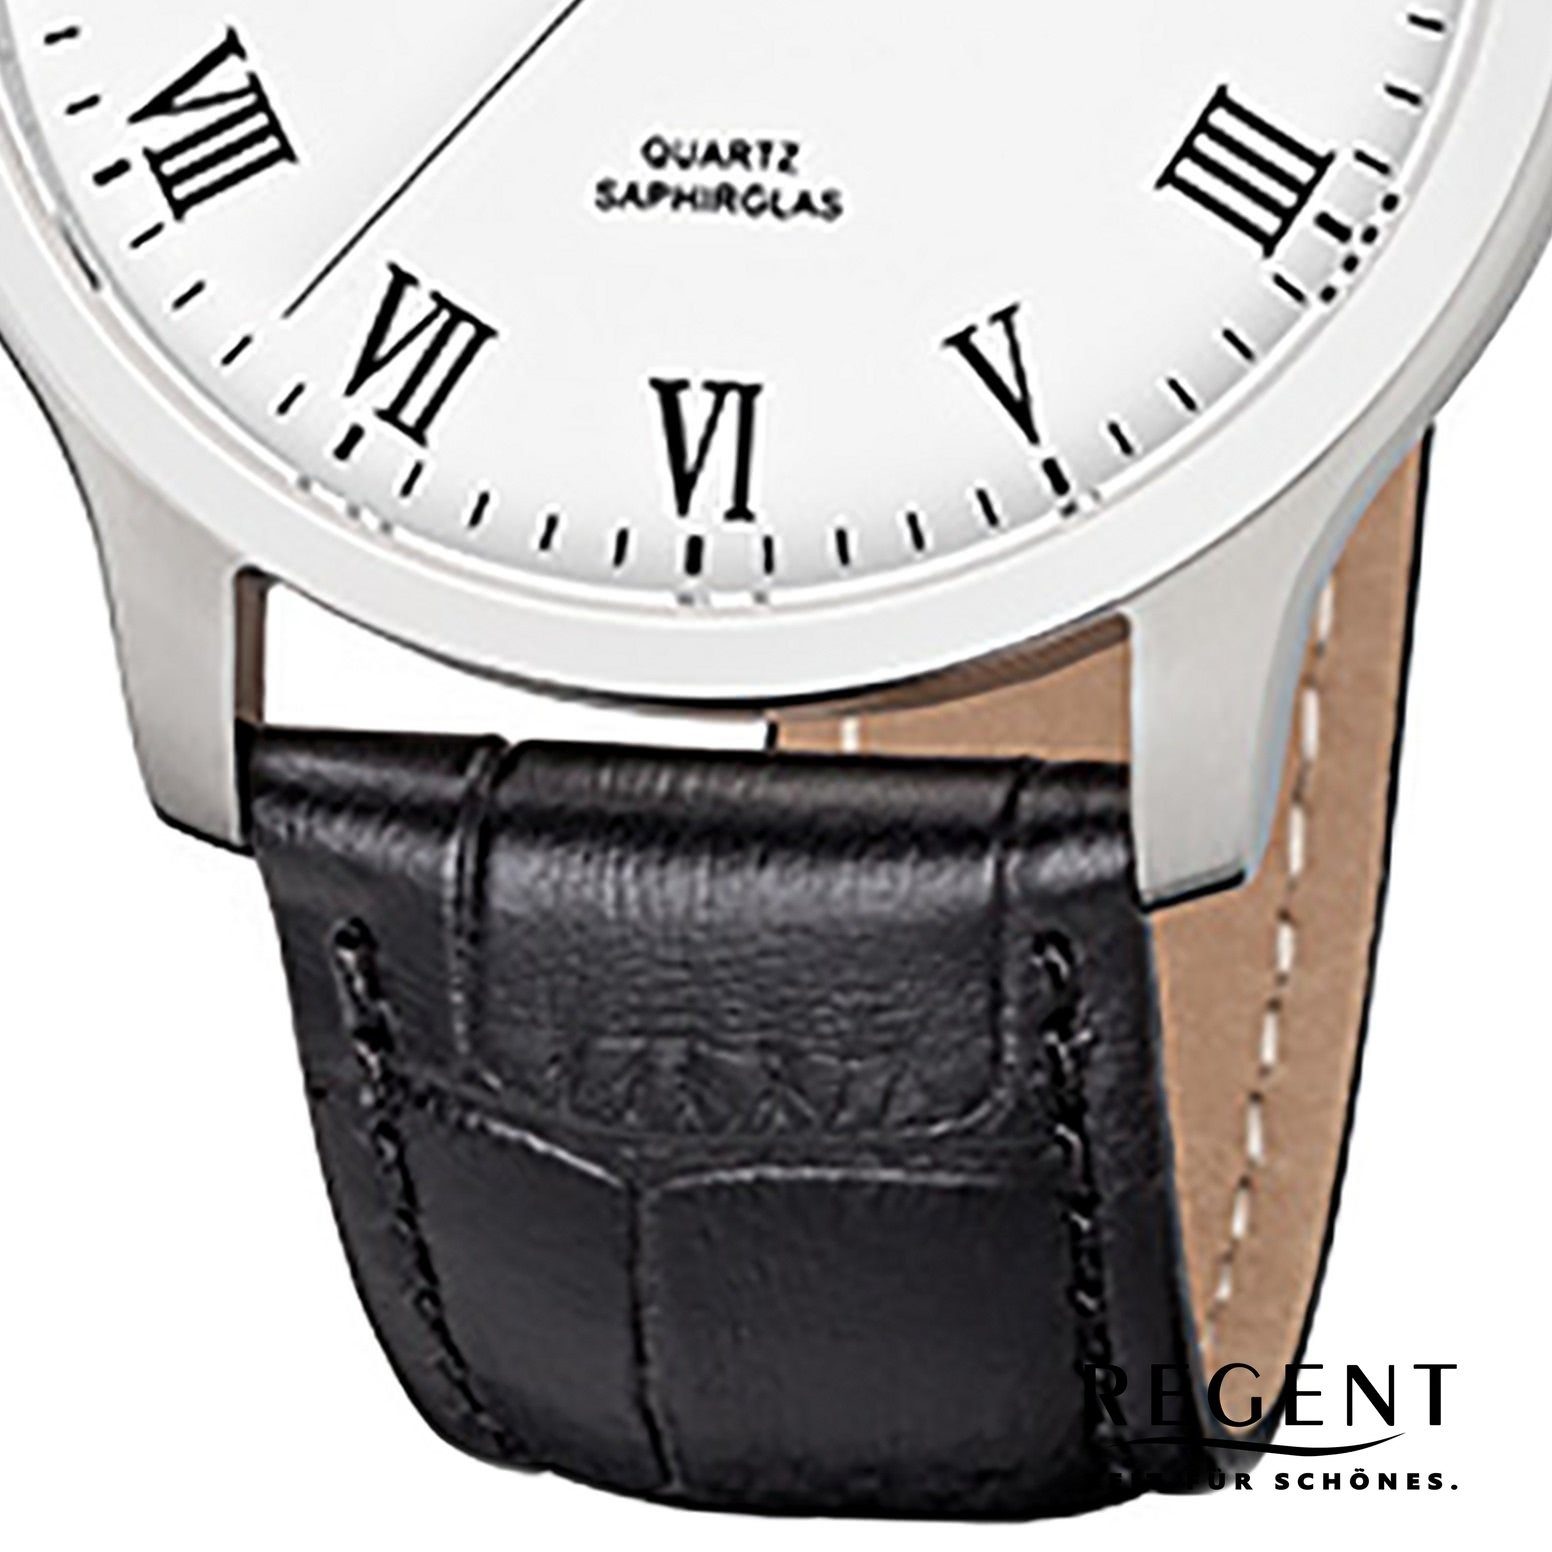 Regent Quarzuhr 39mm), Regent Analog, Herren-Armbanduhr Armbanduhr schwarz mittel Lederarmband (ca. rund, Herren